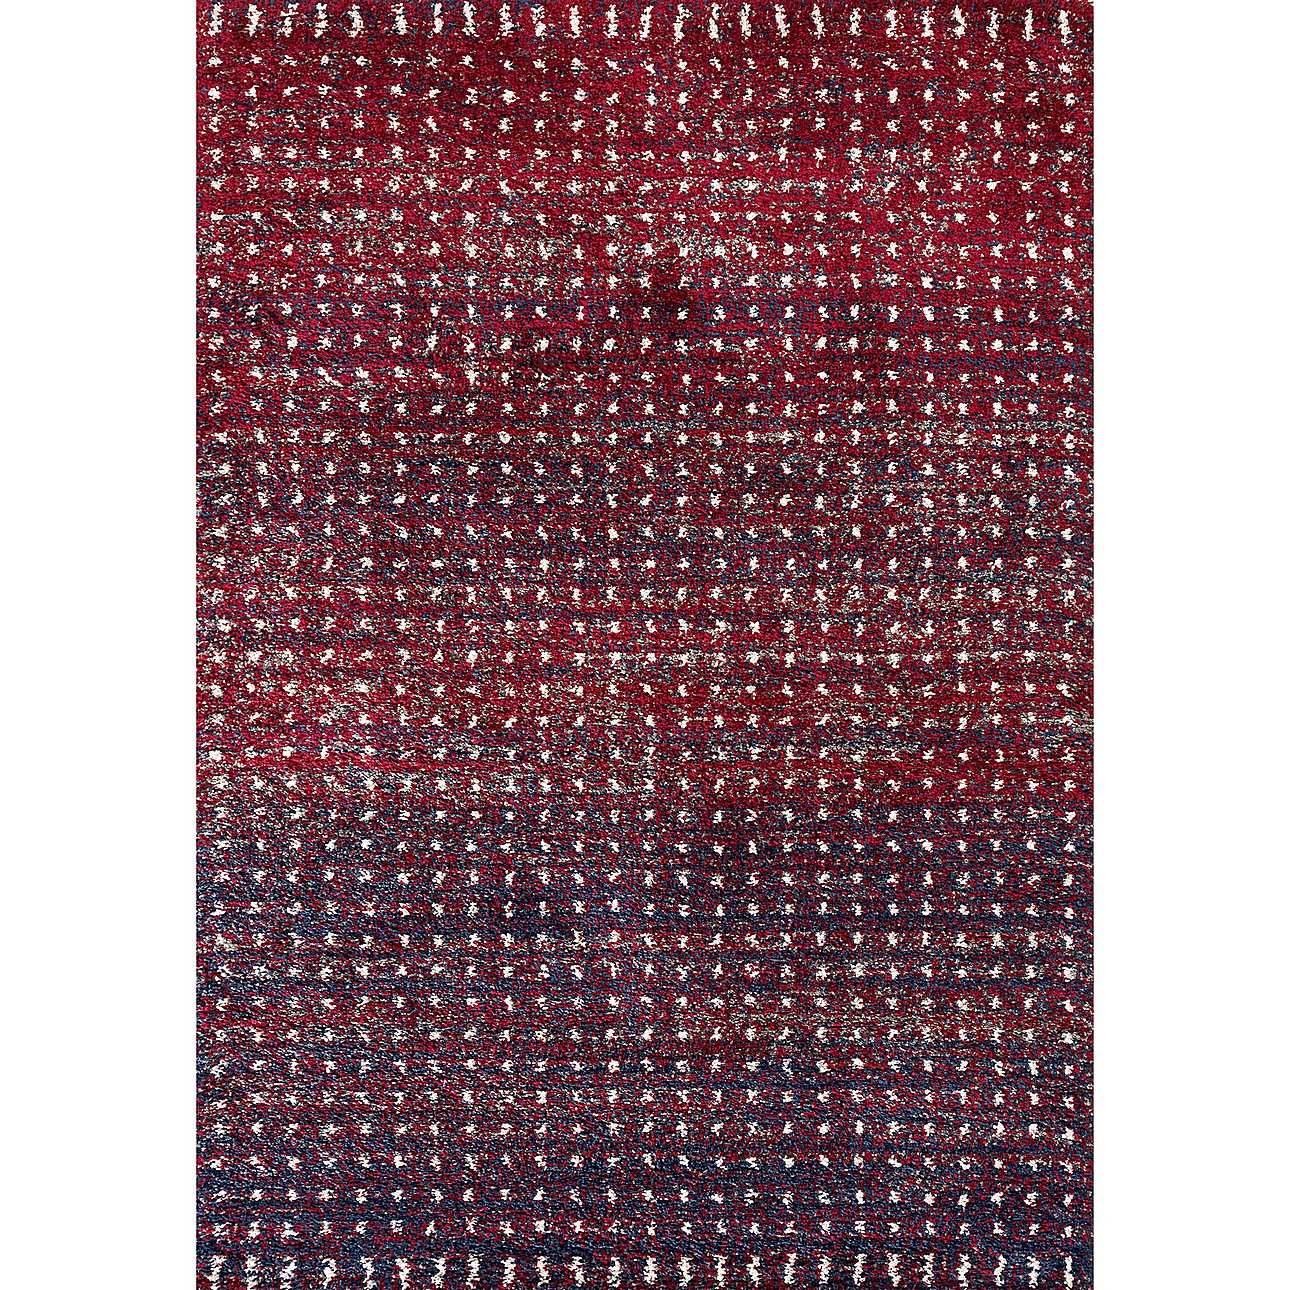 Koberec Royal cherry red/navy 160x230cm